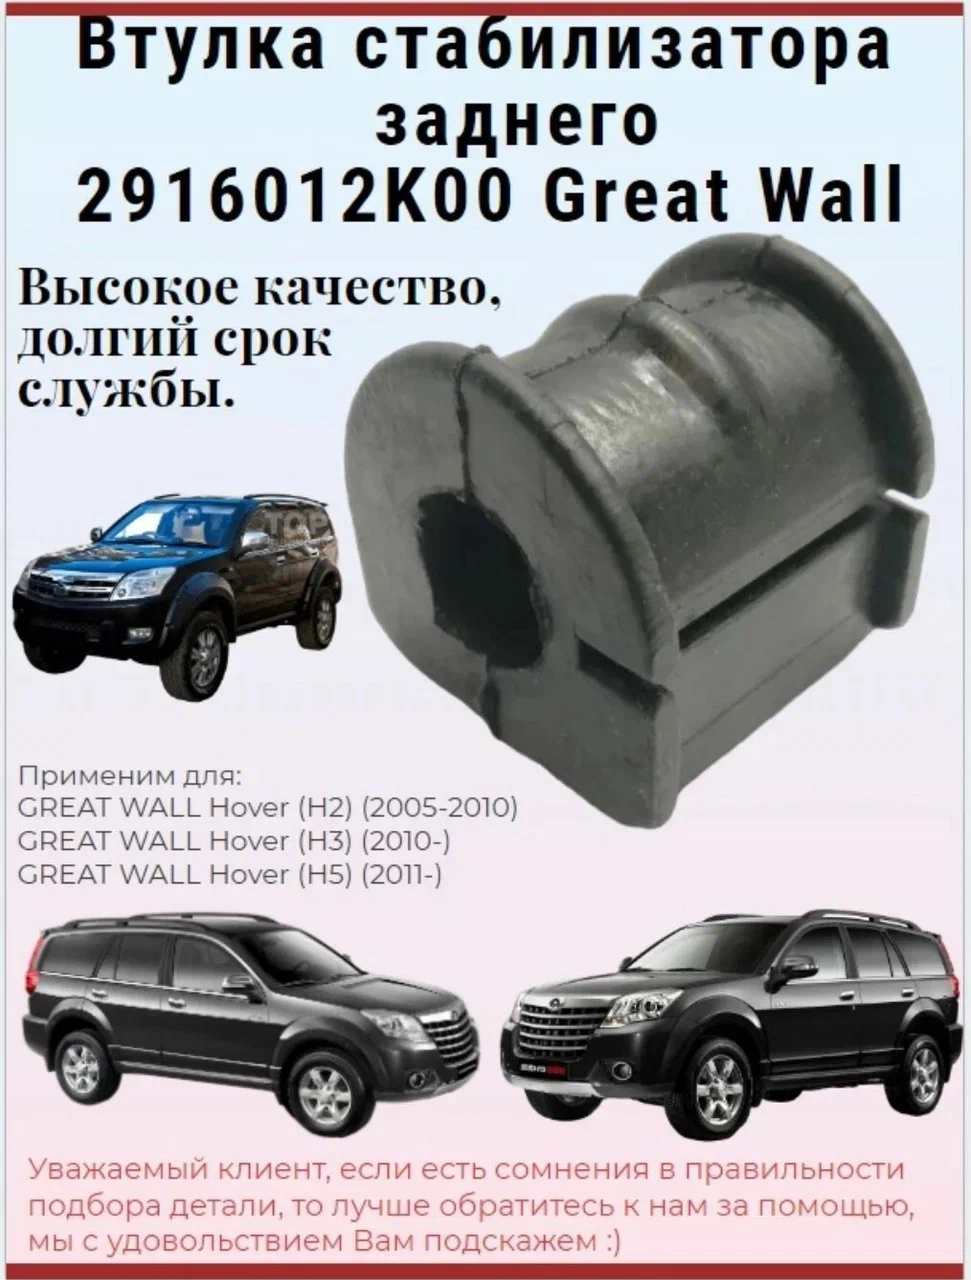 Втулка стабилизатора заднего Great Wall арт. 2916012k00 для Great Wall Hover